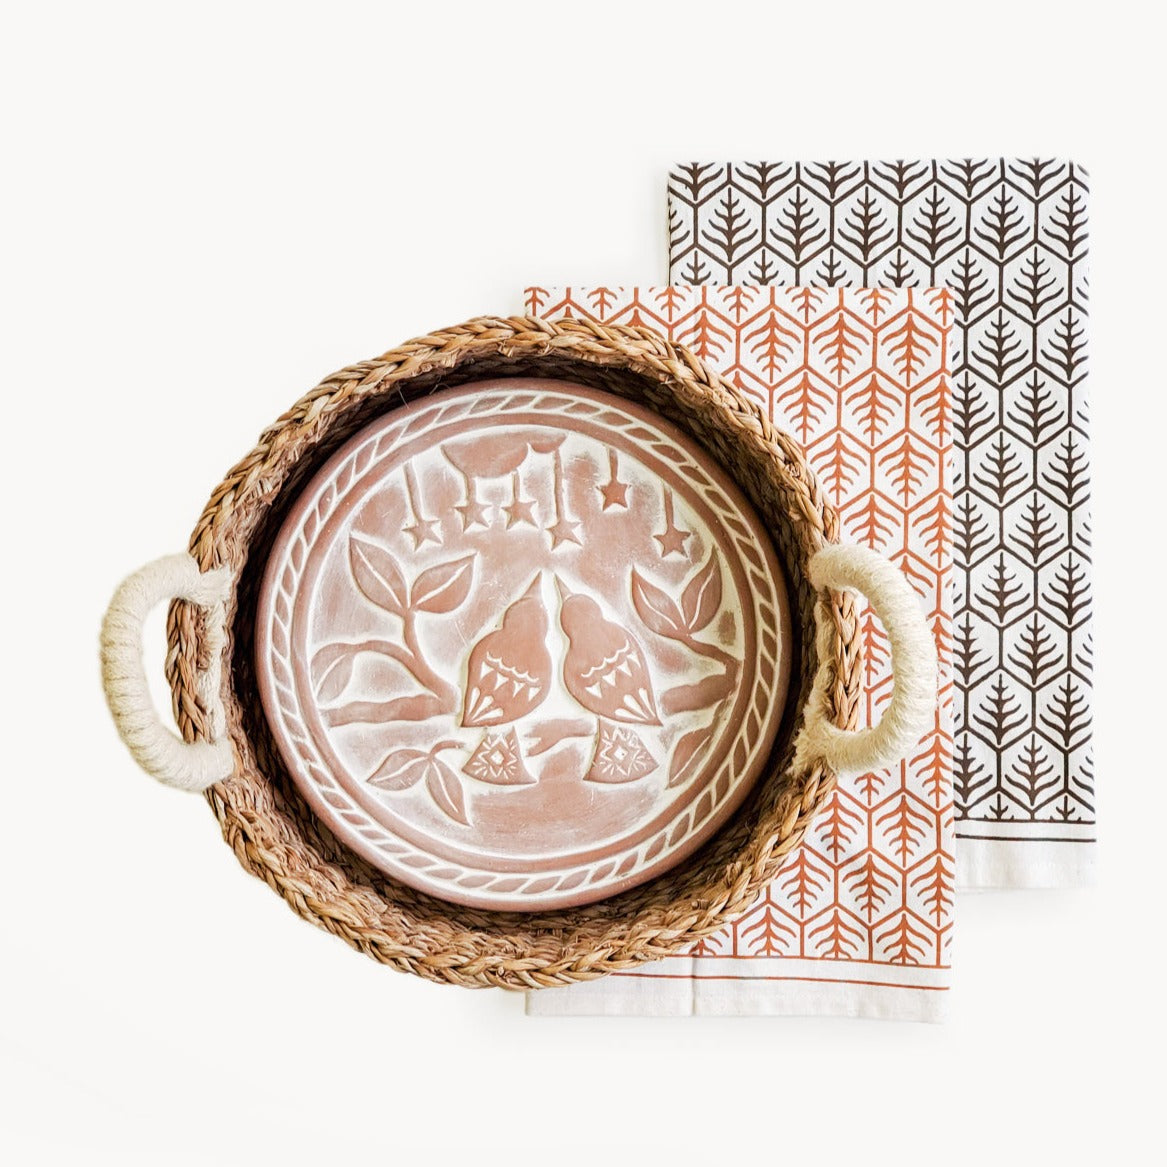 Bread Warmer & Basket Gift Set with Tea Towel - Lovebird Round-0